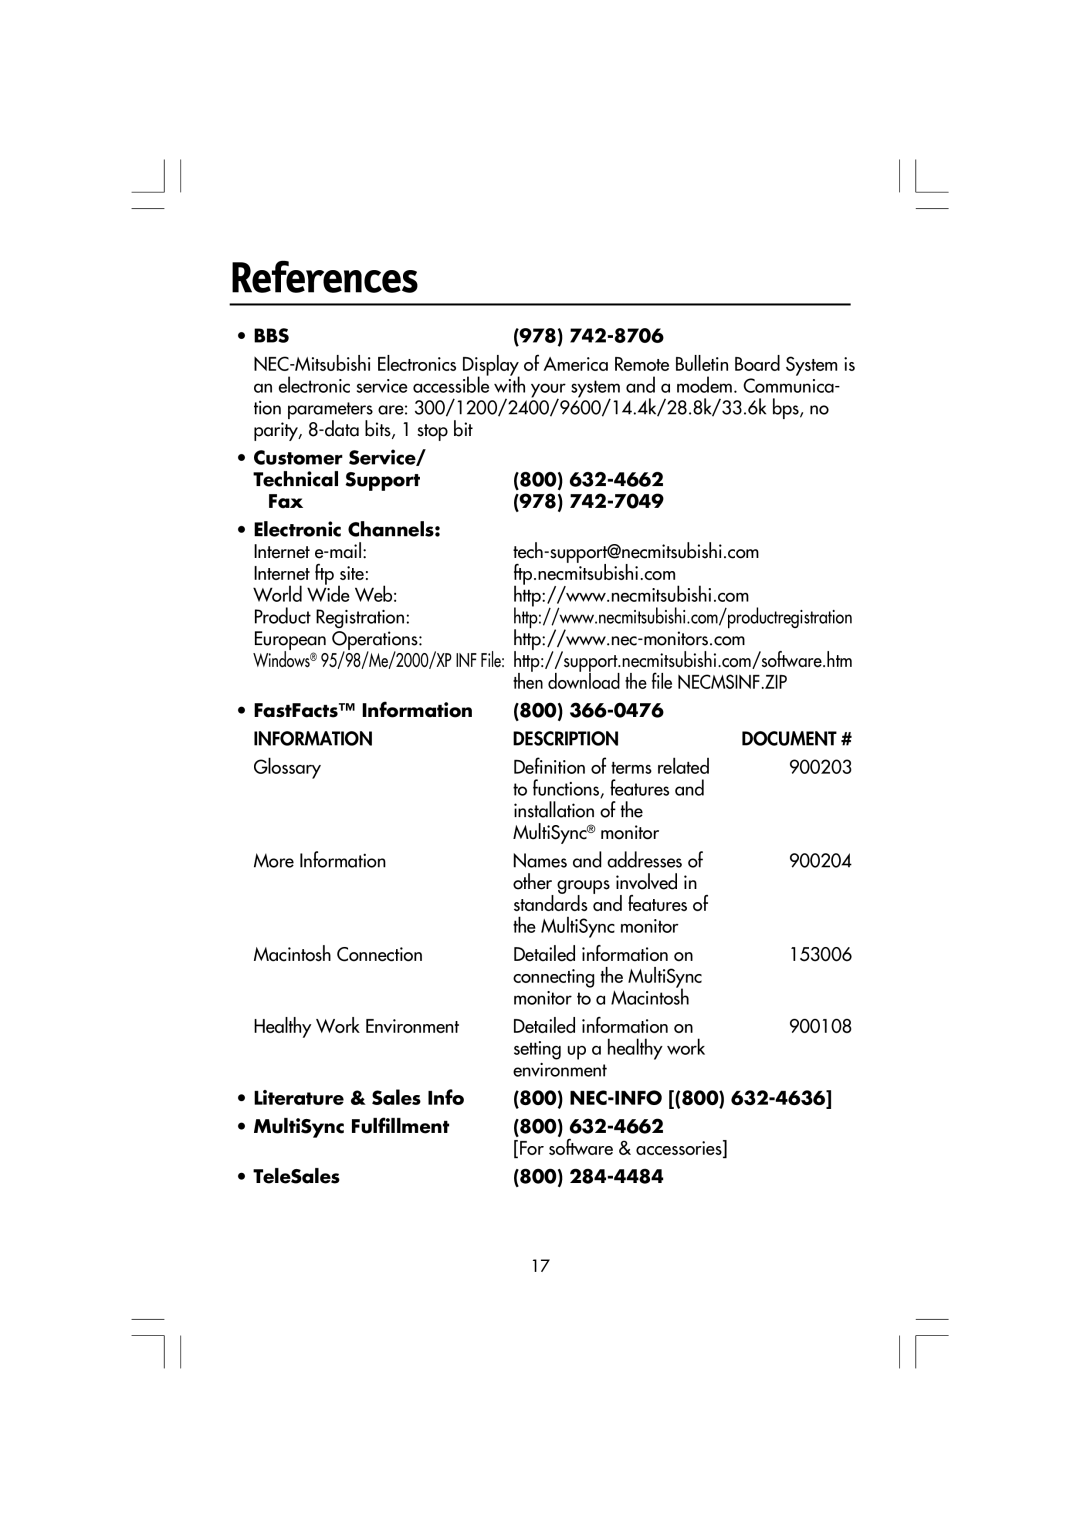 Mitsubishi Electronics LCD1720M manual References, Document # 